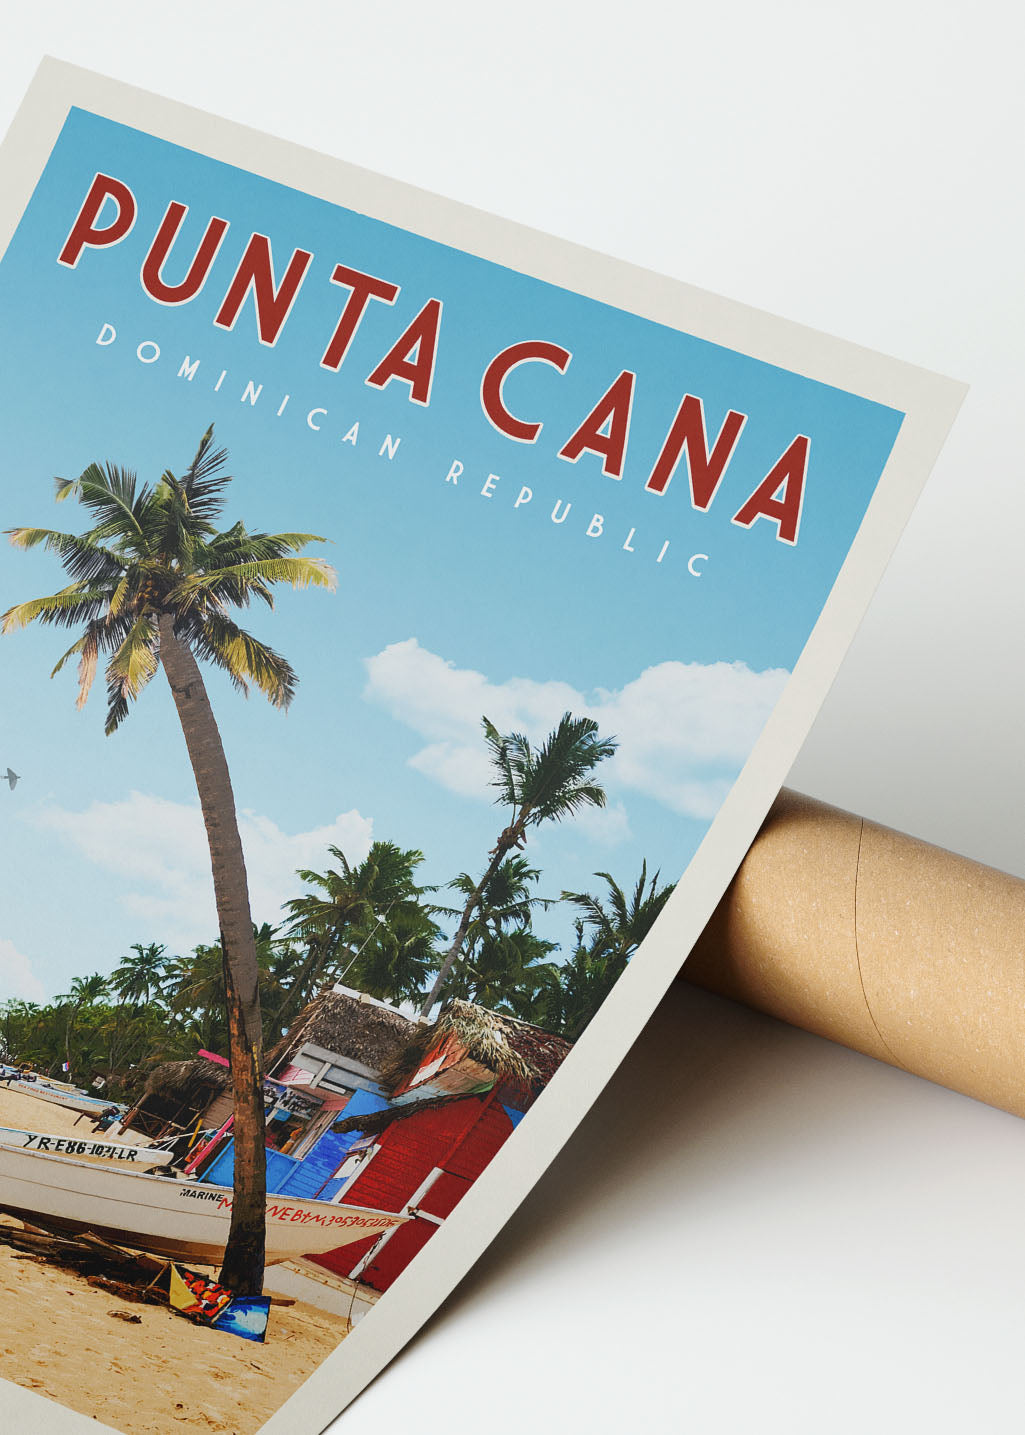 Punta Cana, Dominican Republic - Vintage Travel Print